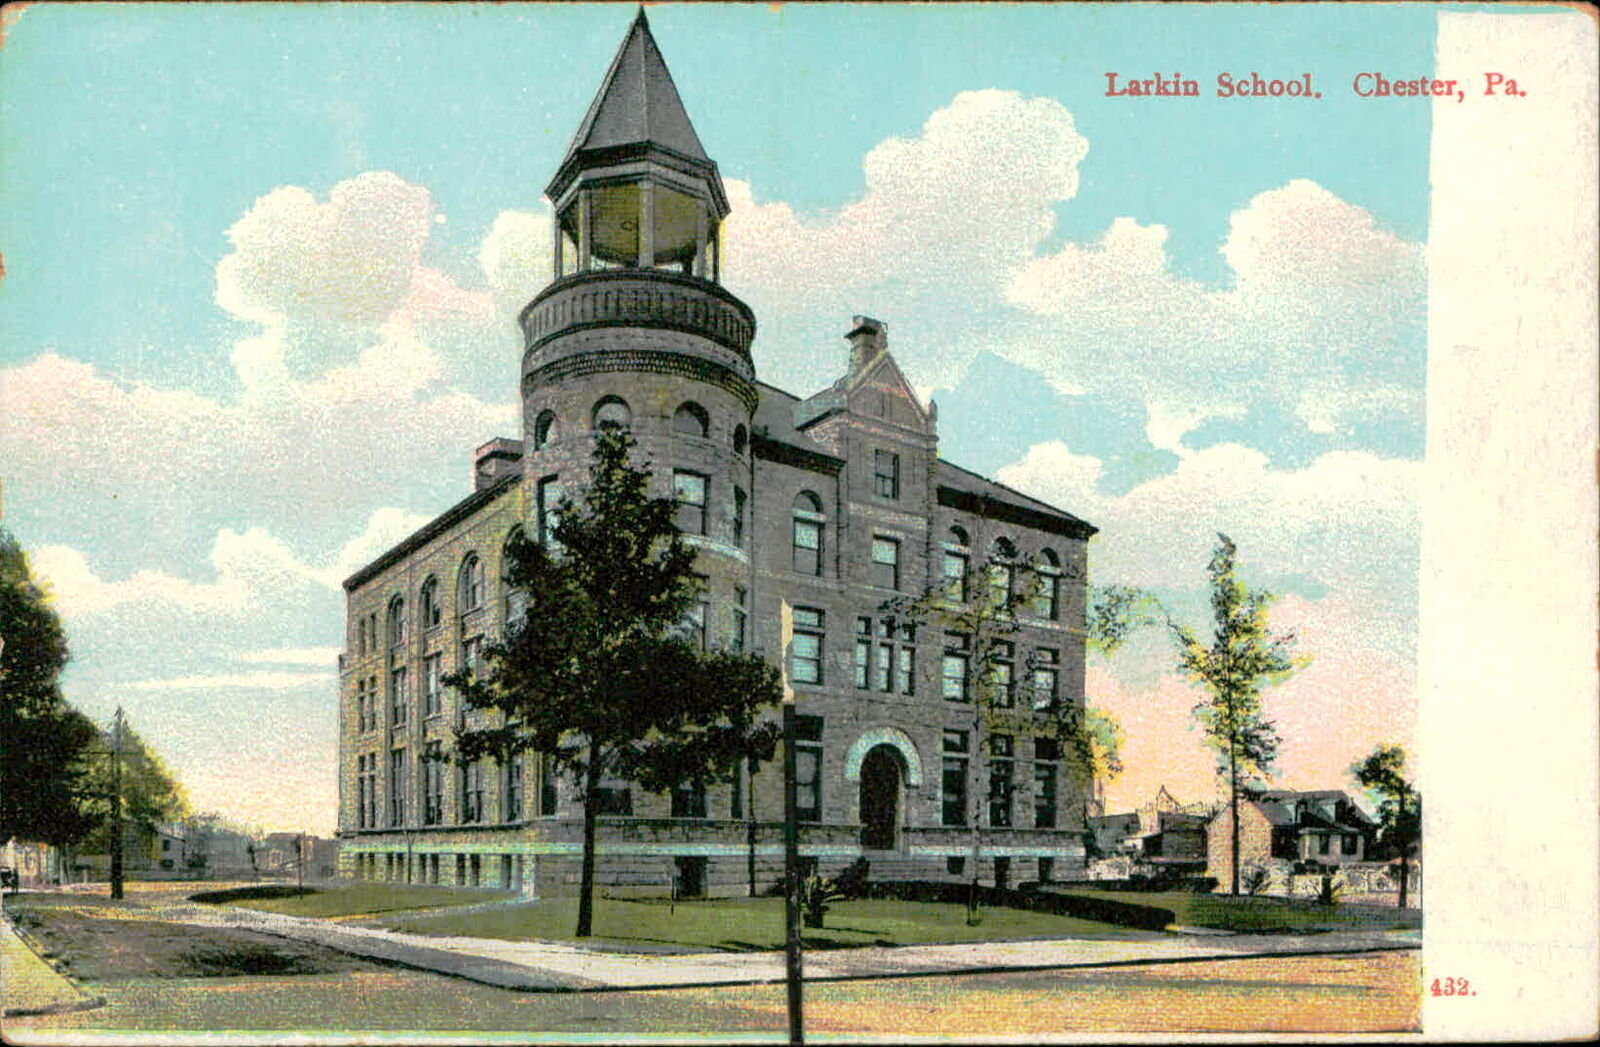 Postcard: i Larkin School. Chester, Pa. 432.